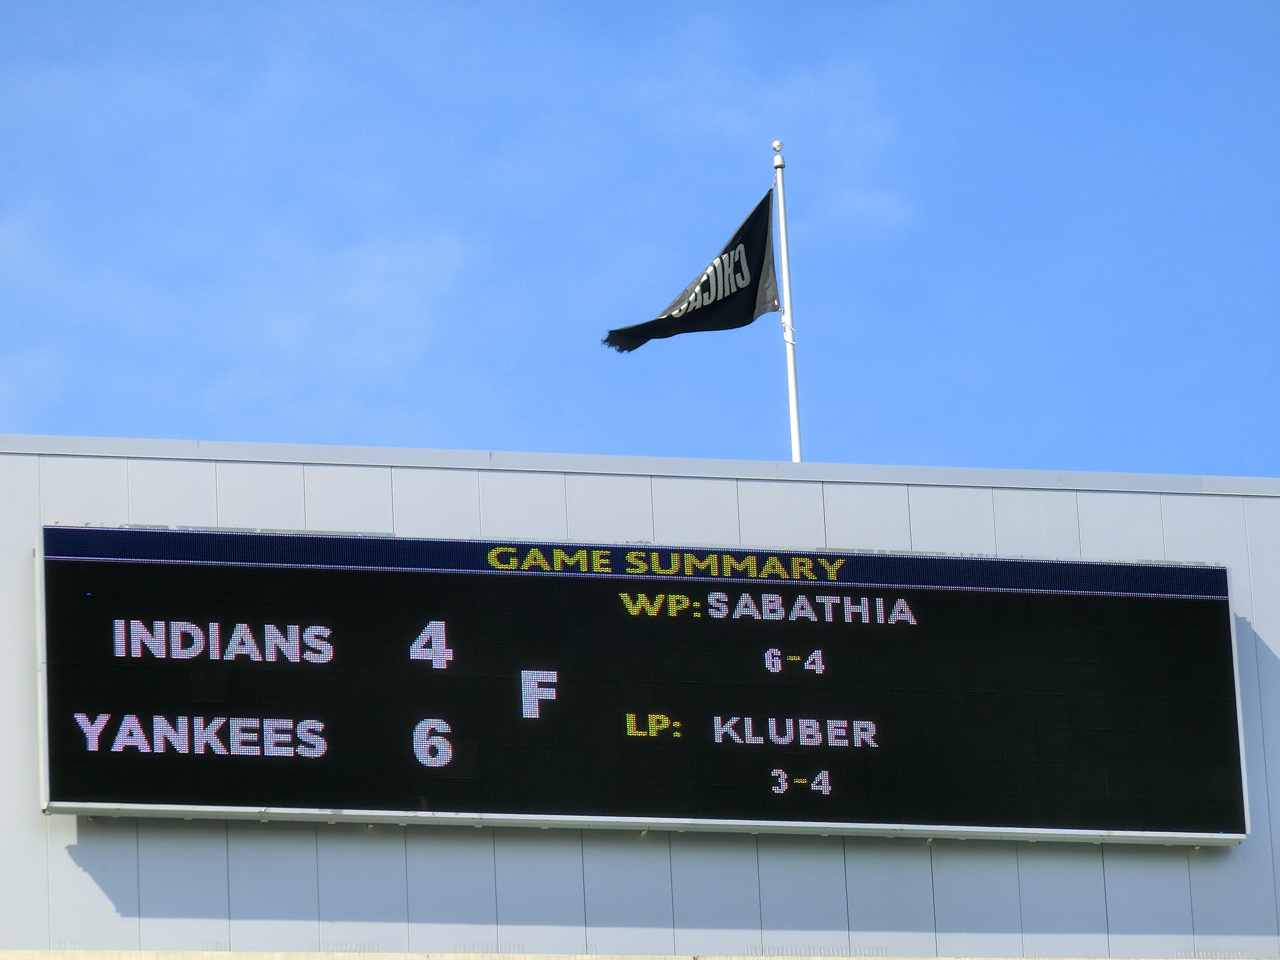 05. Juni 2013 - Endergebnis New York Yankees vs. Cleveland Indians: 6:4, Winning Pitcher: Sabathia, Losing Pitcher: Kluber